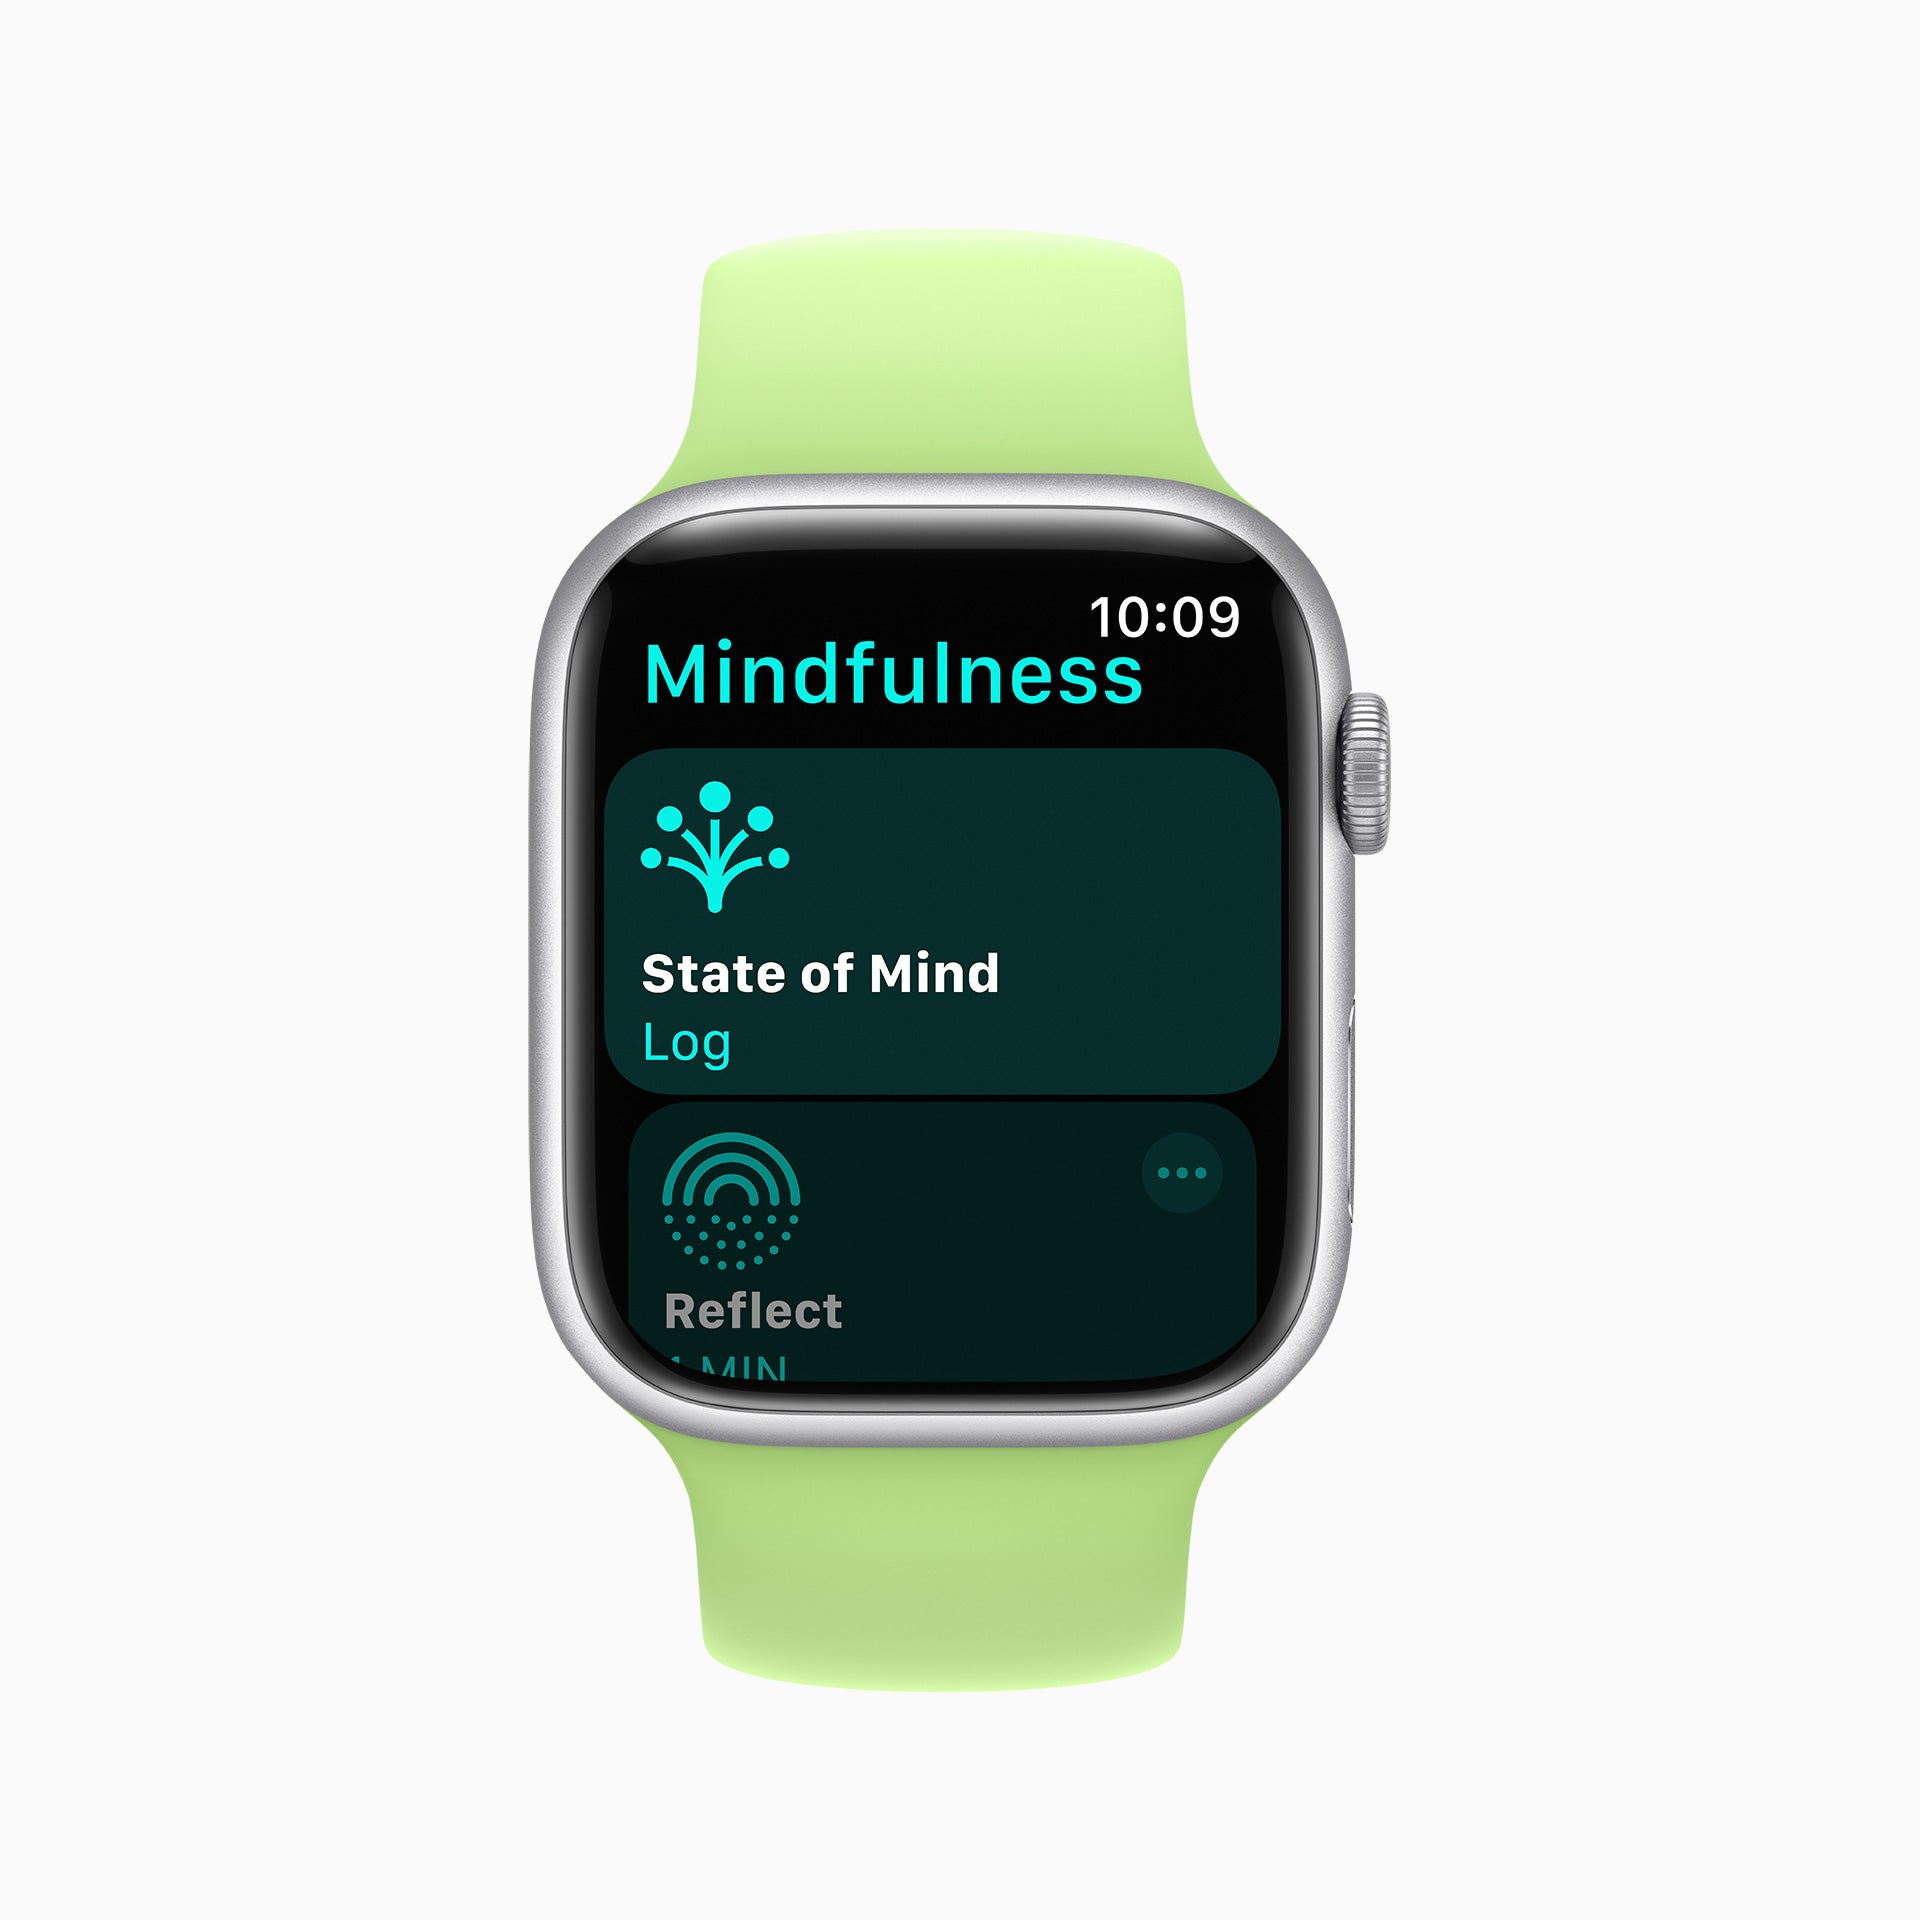 हैप्पी स्क्रॉलिंग - एप्पल ने मानसिक स्वास्थ्य ट्रैकर लॉन्च किया